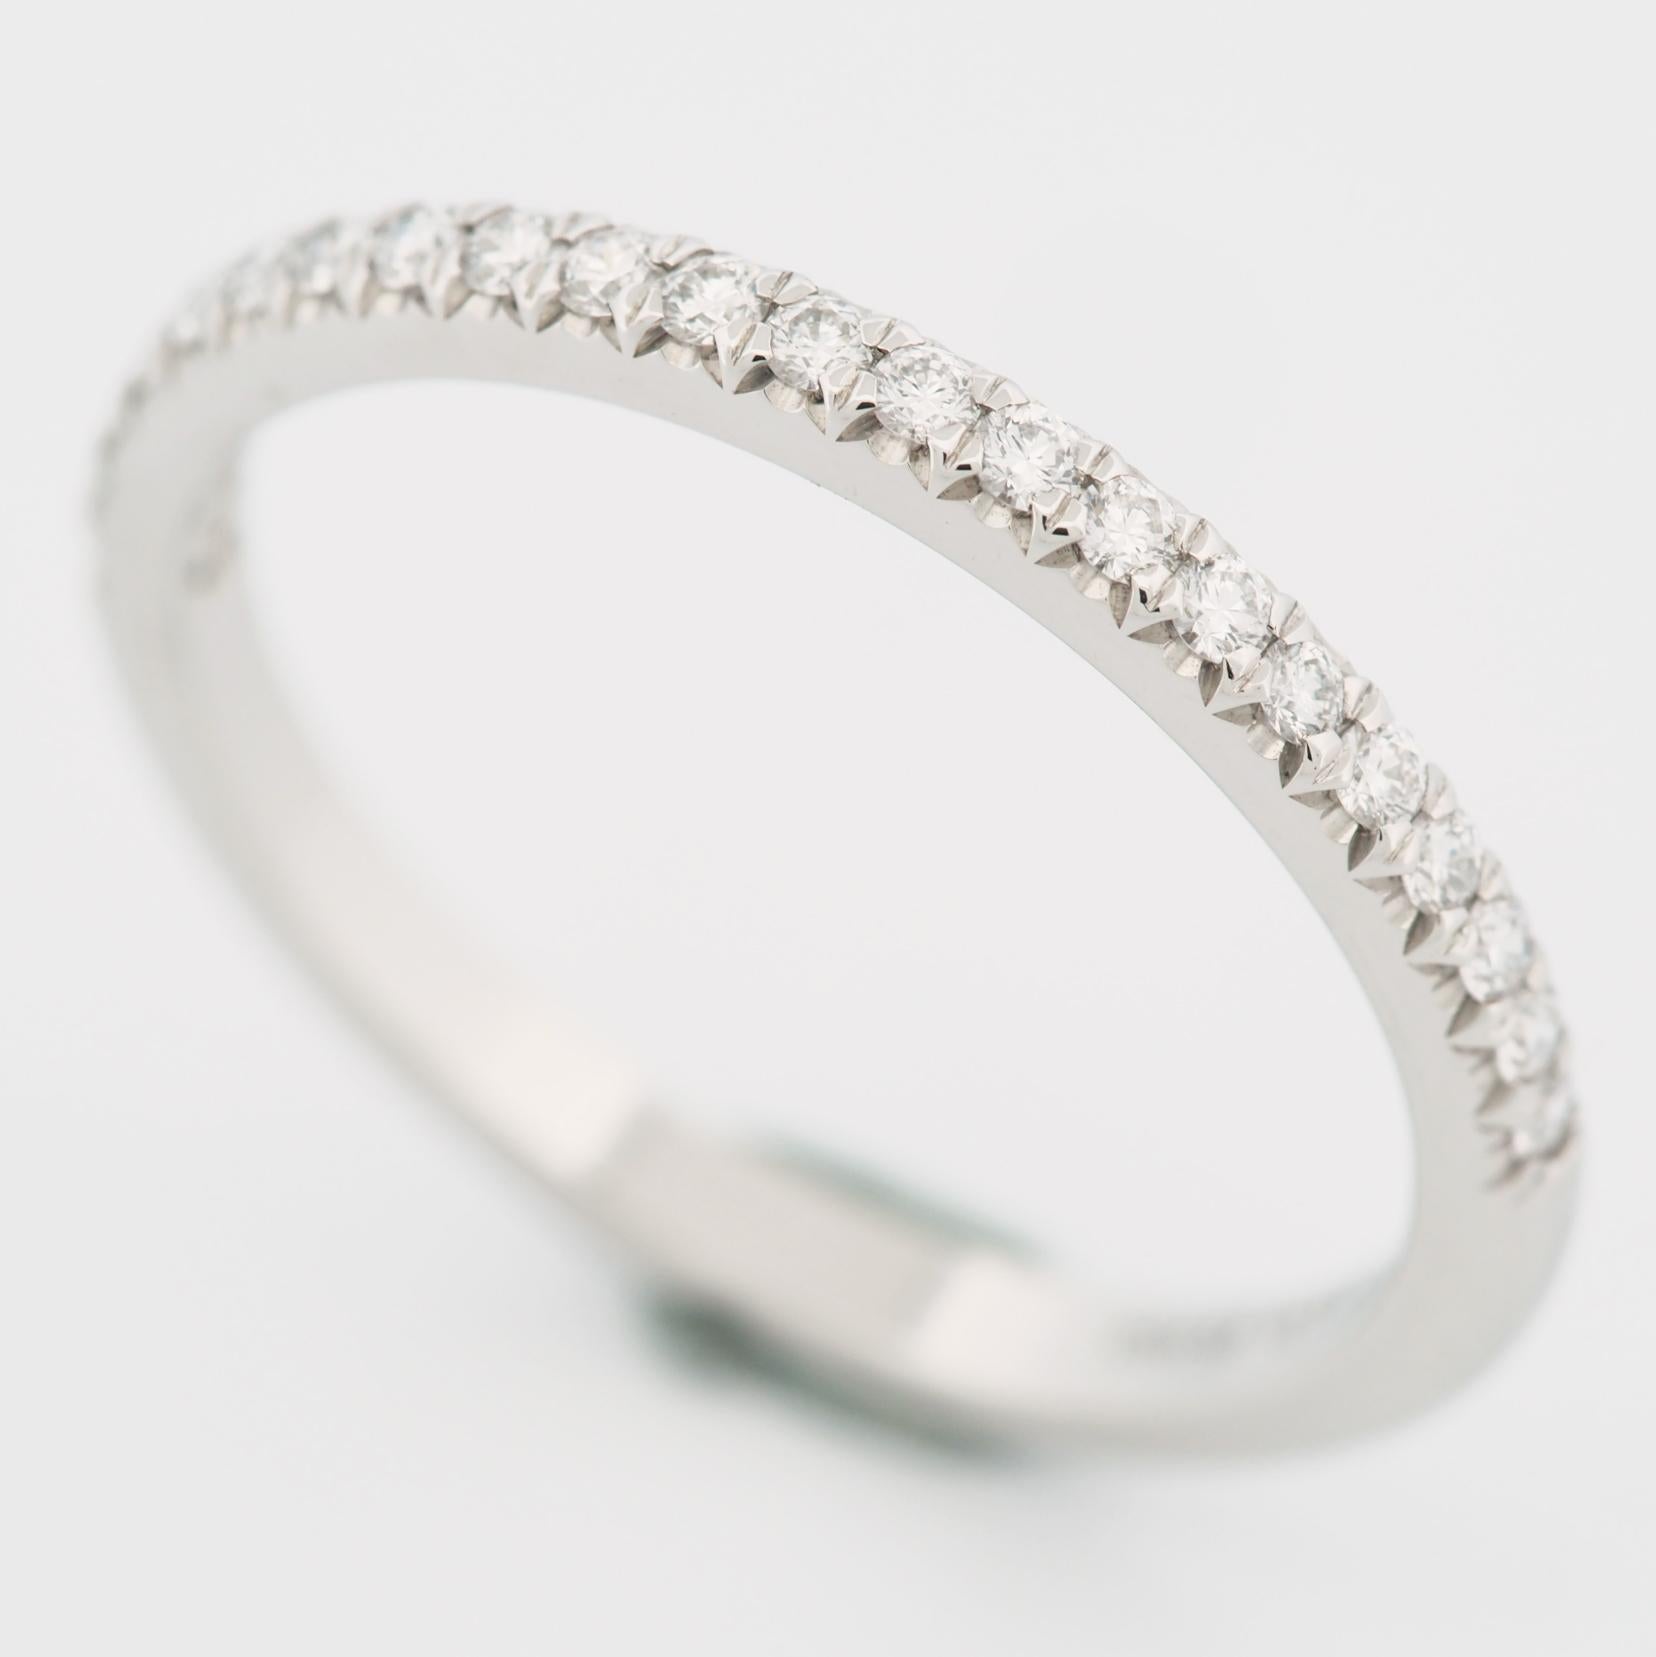 Item: Tiffany & Co. Soleste Half Eternity Diamonds Ring
Stones: Diamond ( 0.17ct )
Metal: Platinum 950
Ring Size: US SIZE 6.75 UK SIZE M 3/4
Internal Diameter: 17.15 mm
Measurement: 2.0 mm
Weight: 3.2 Grams
Condition: Used (repolished)
Retail Price: